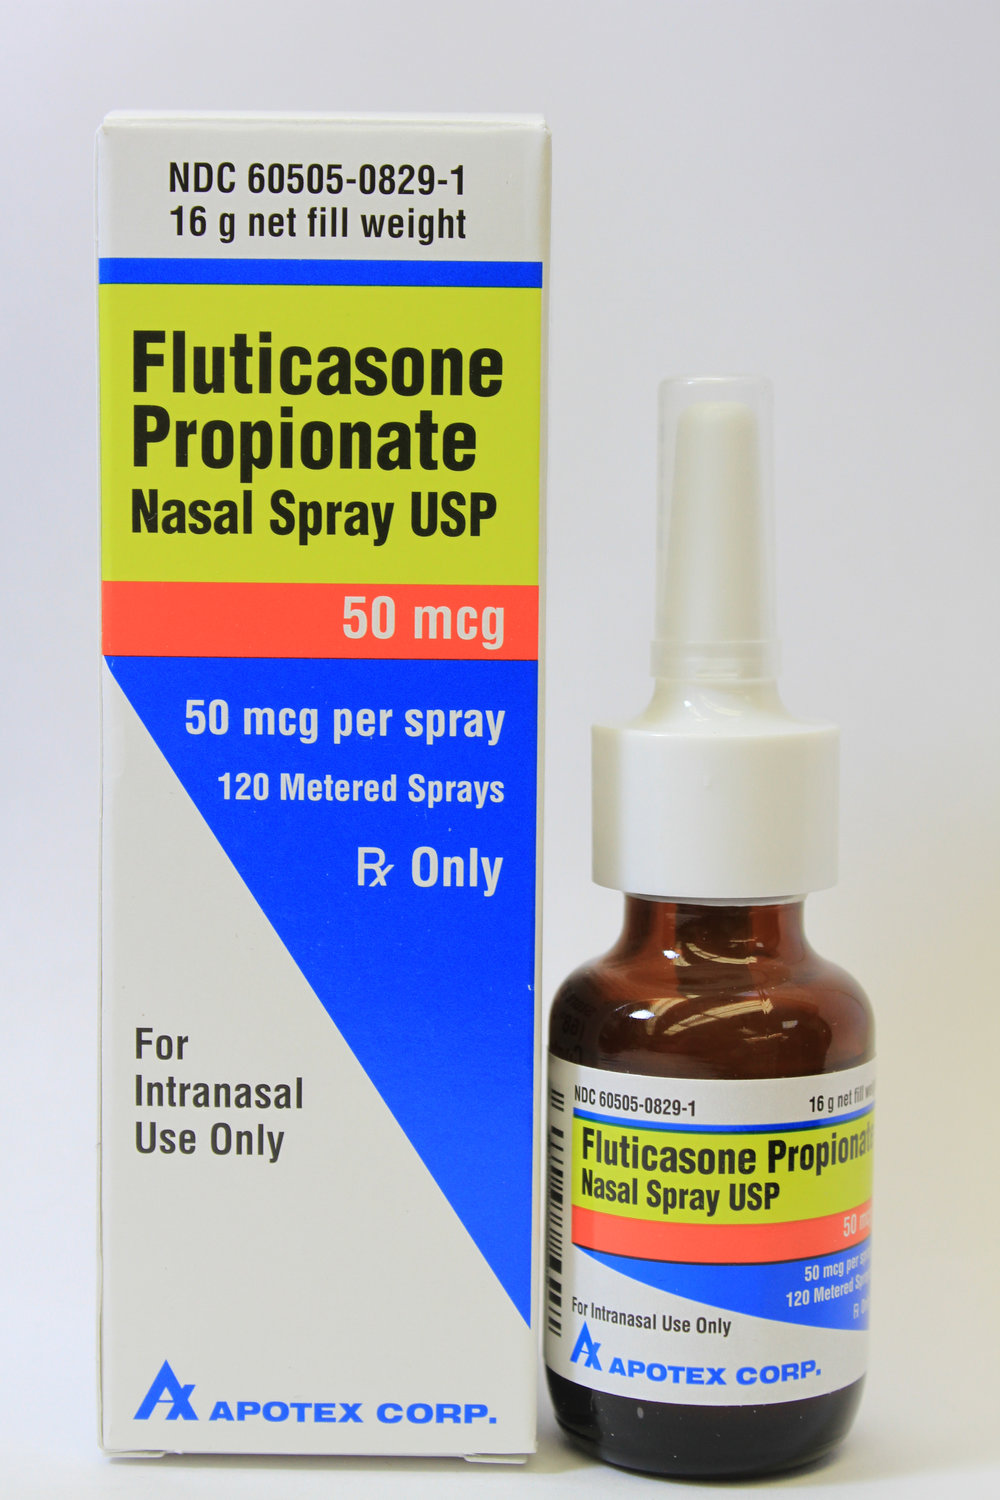 fluticasone propionate nasal spray usp side effects